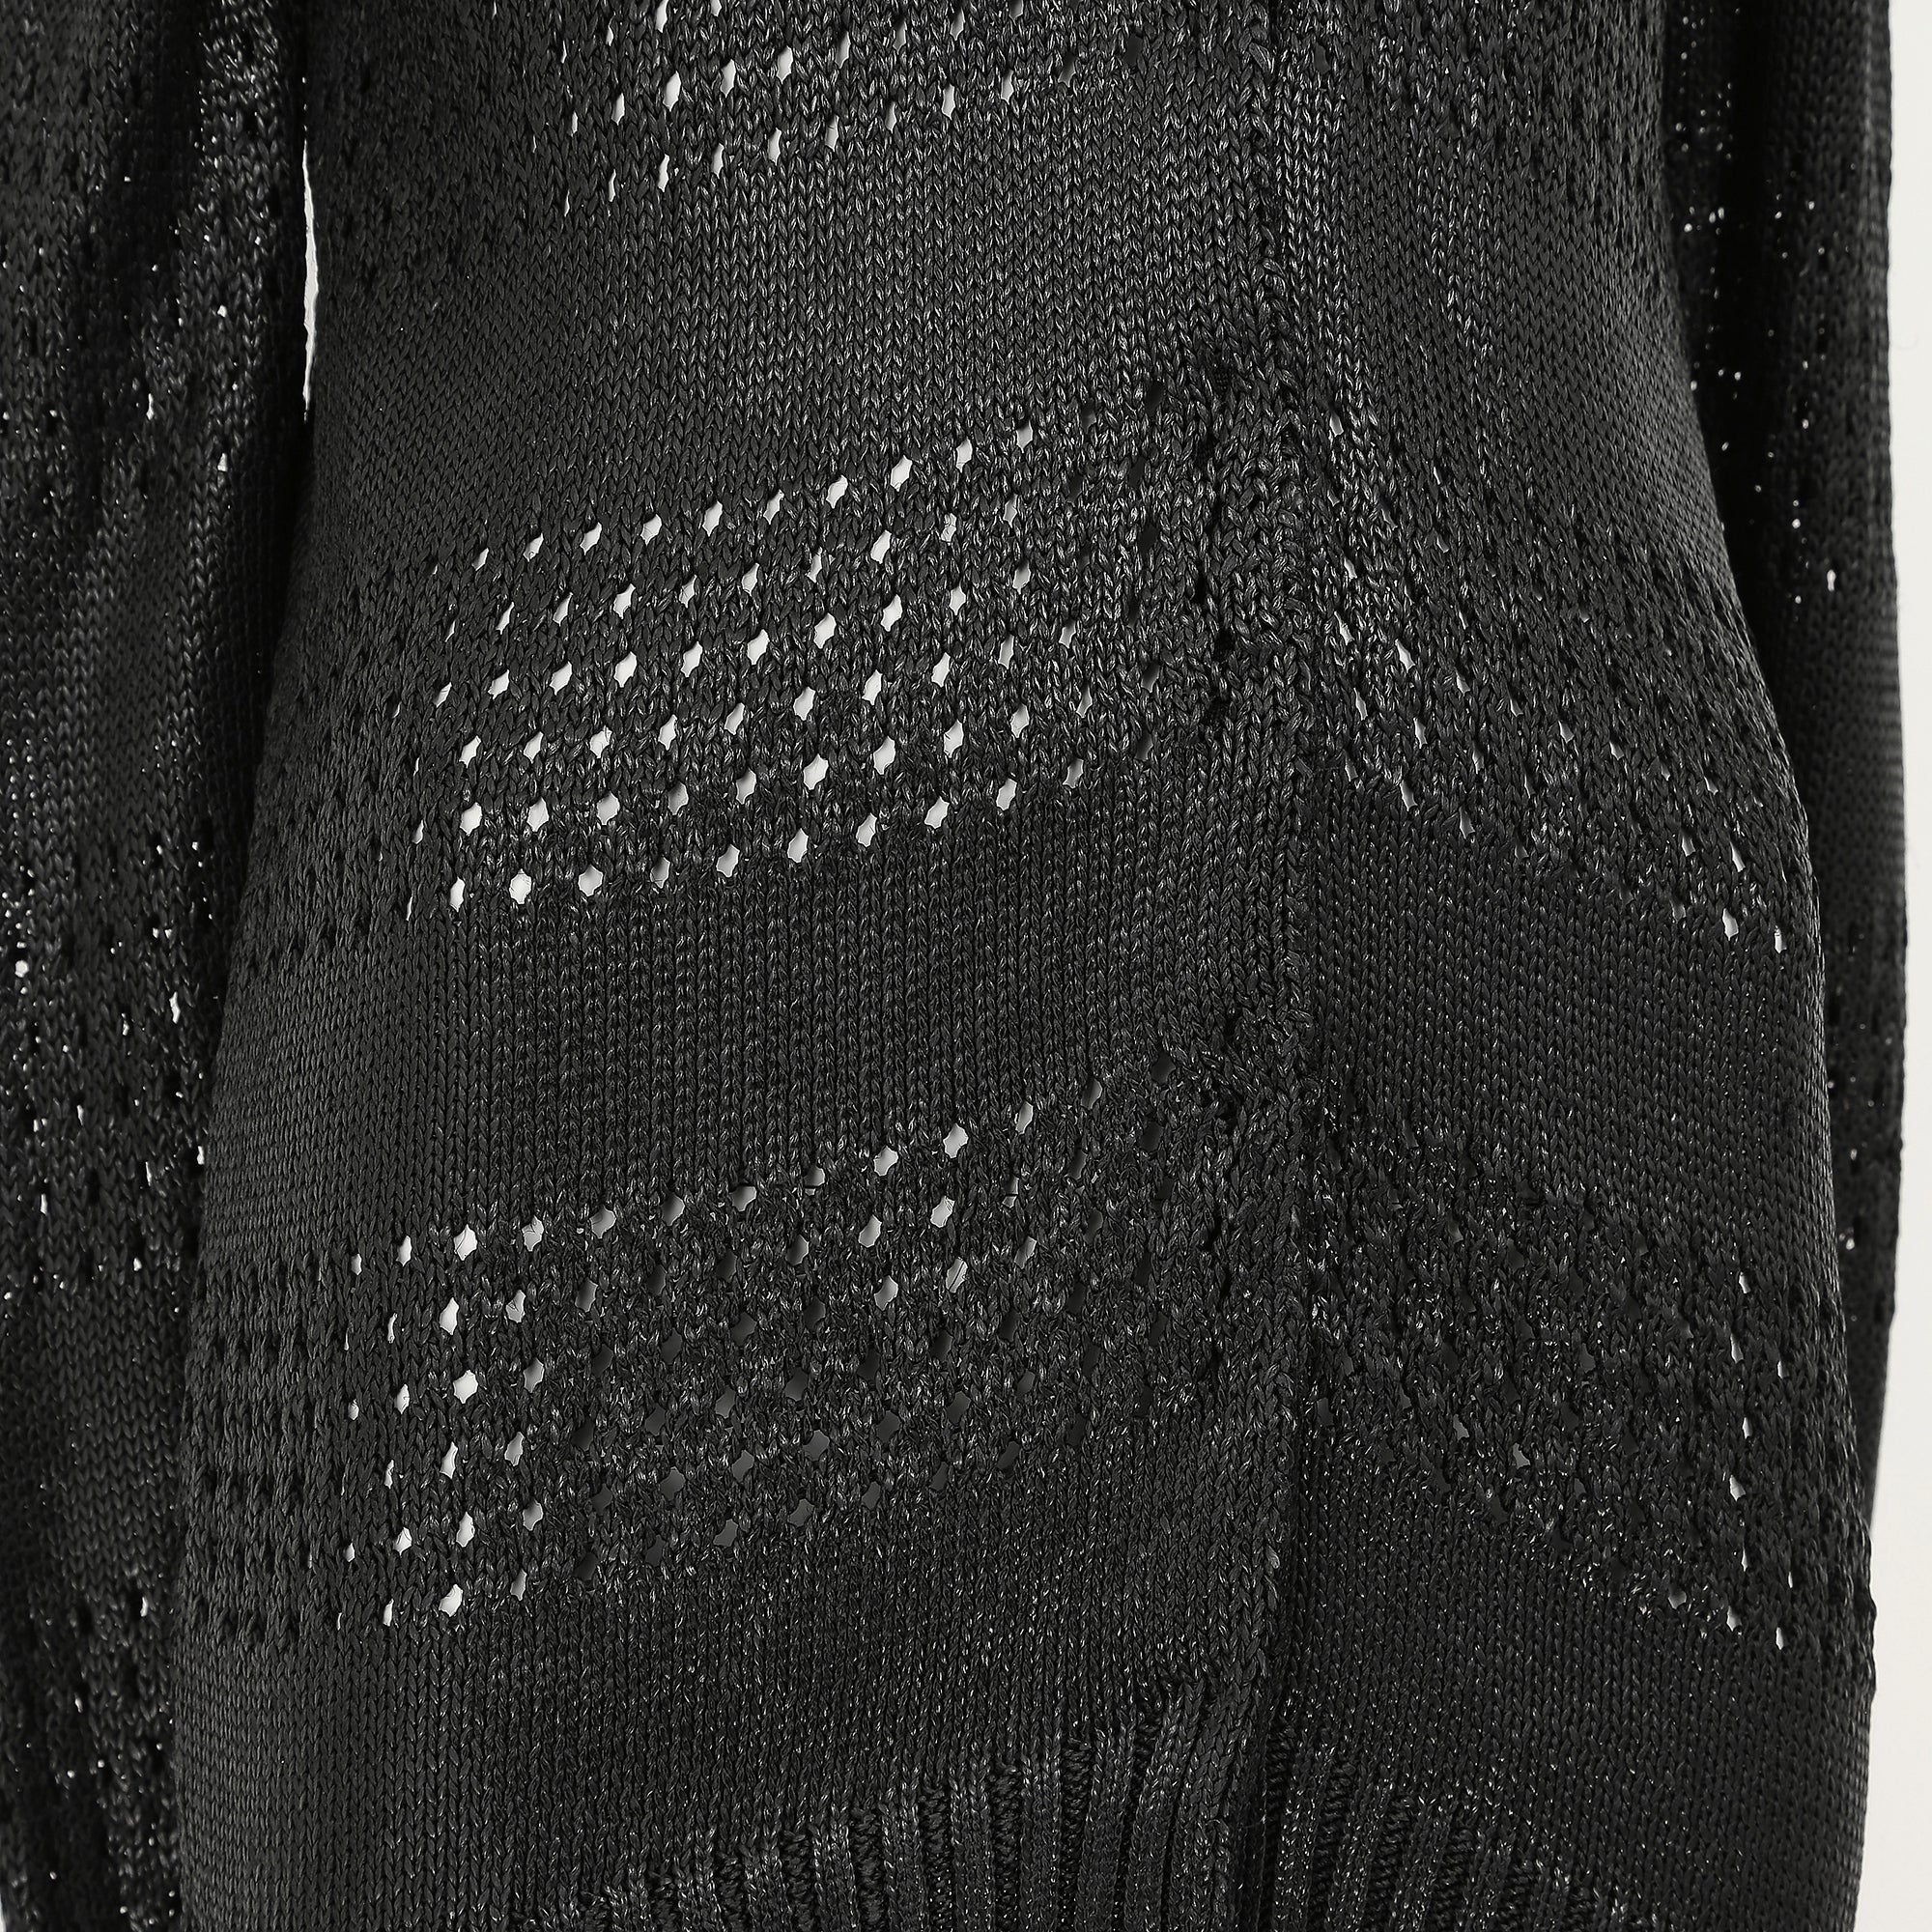 2010 Balenciaga Textured Black Knit Long Cardigan